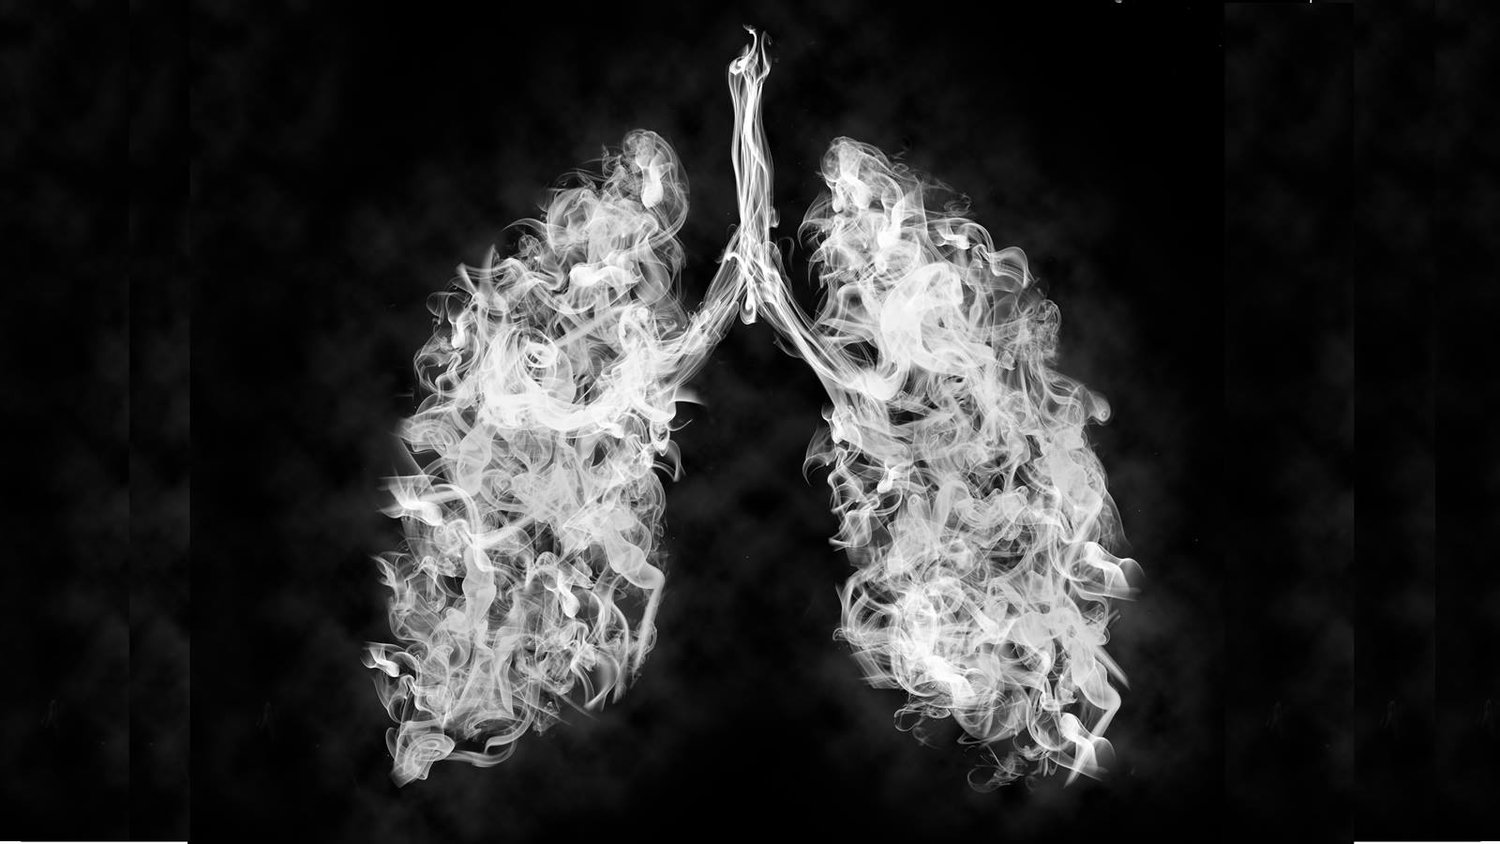 Vaping lungs